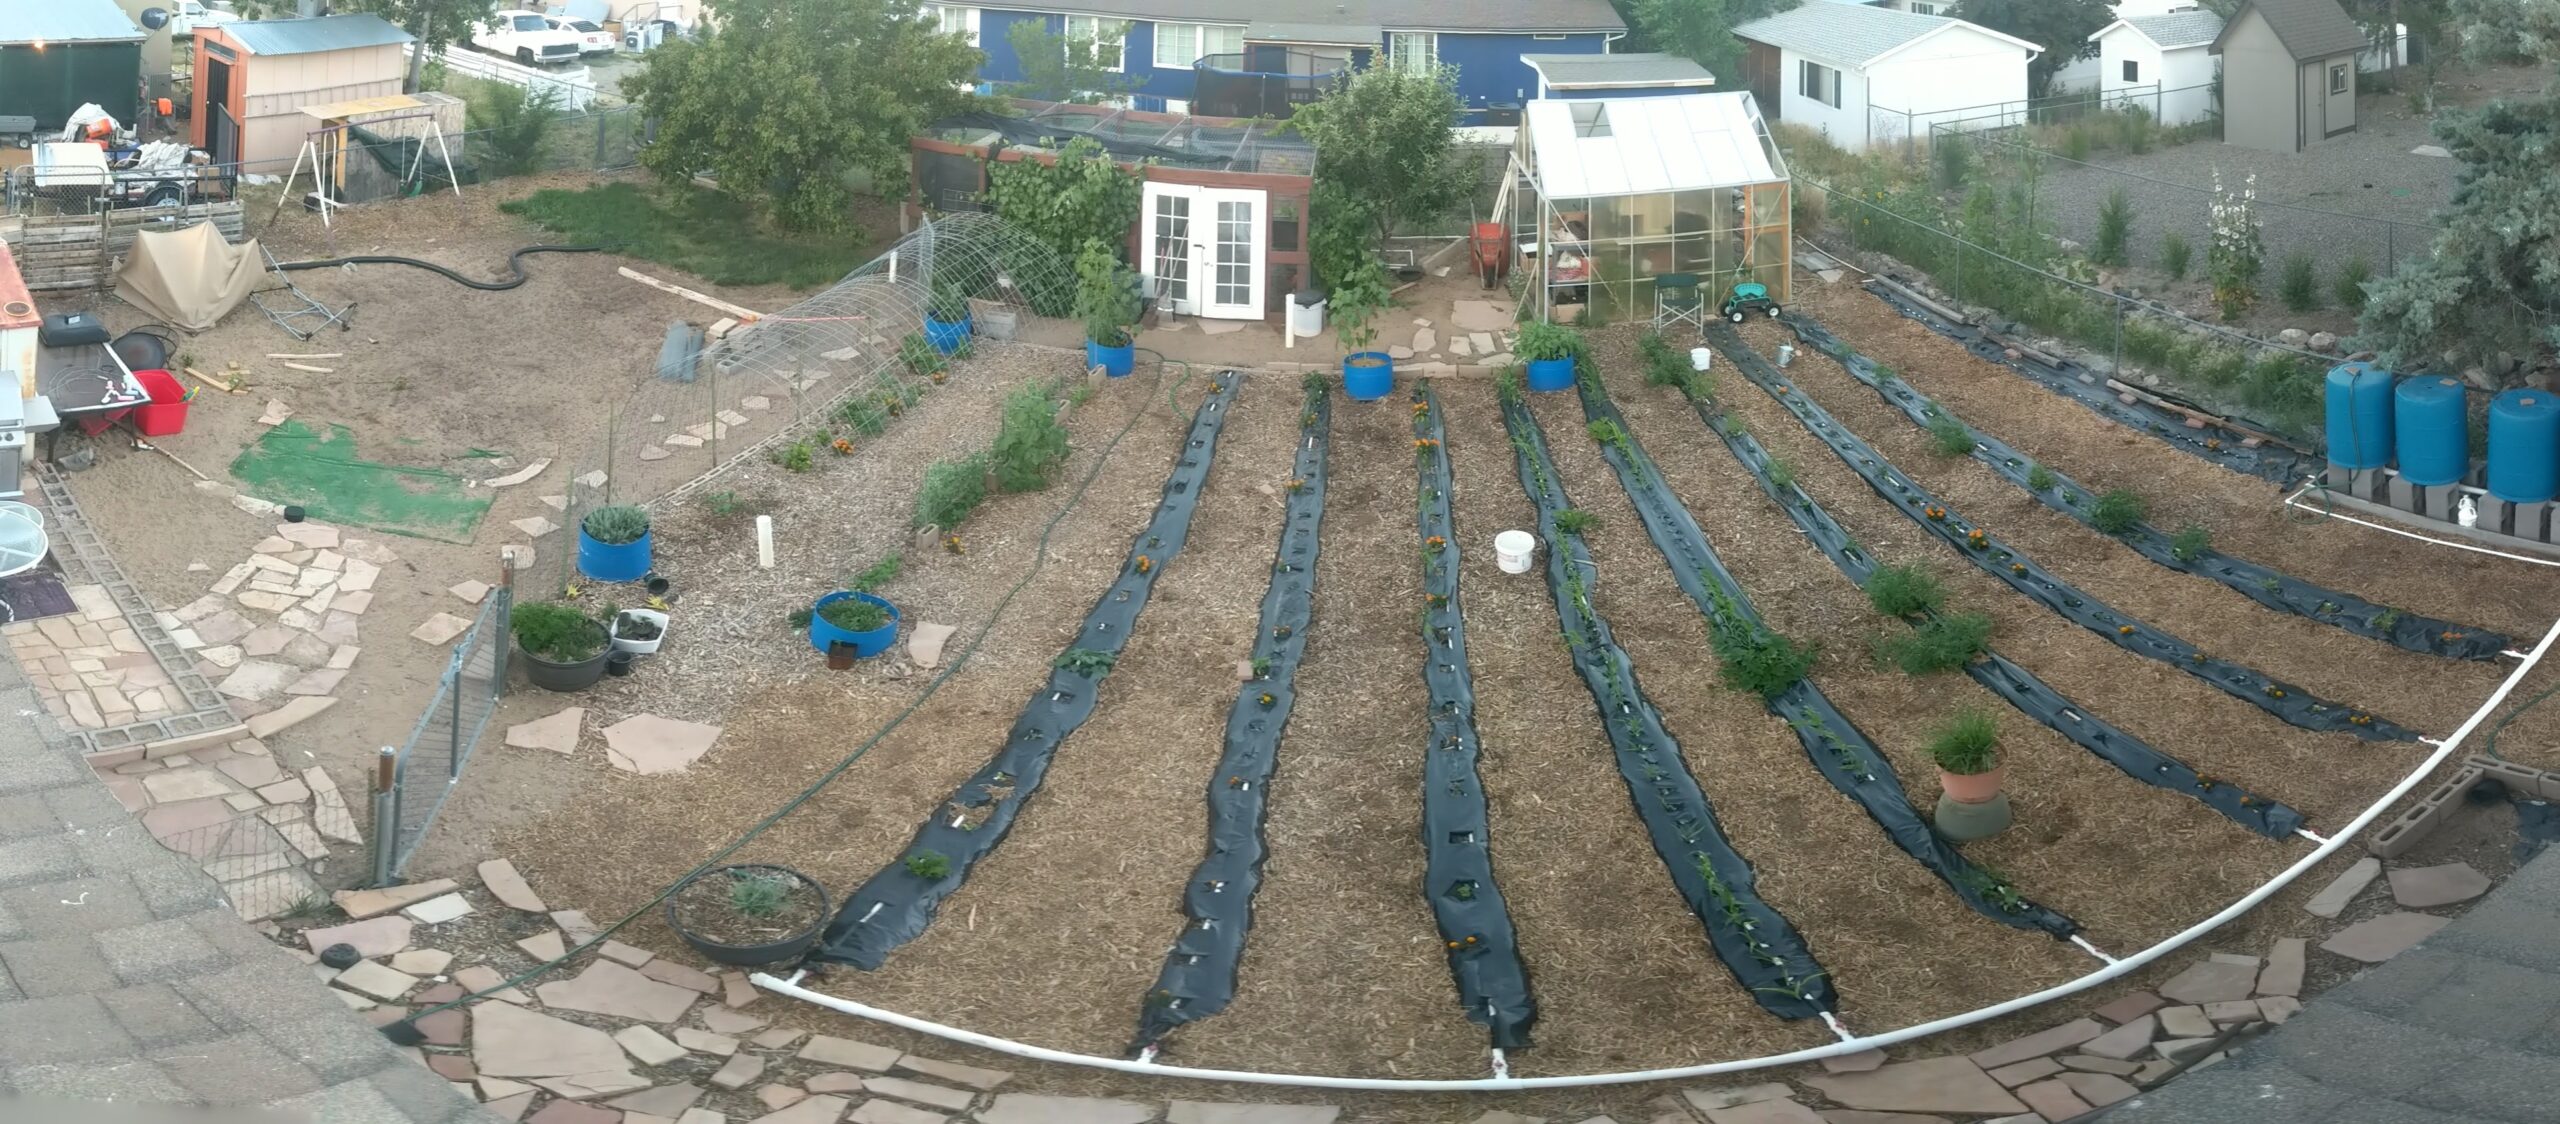 Garden Watering System